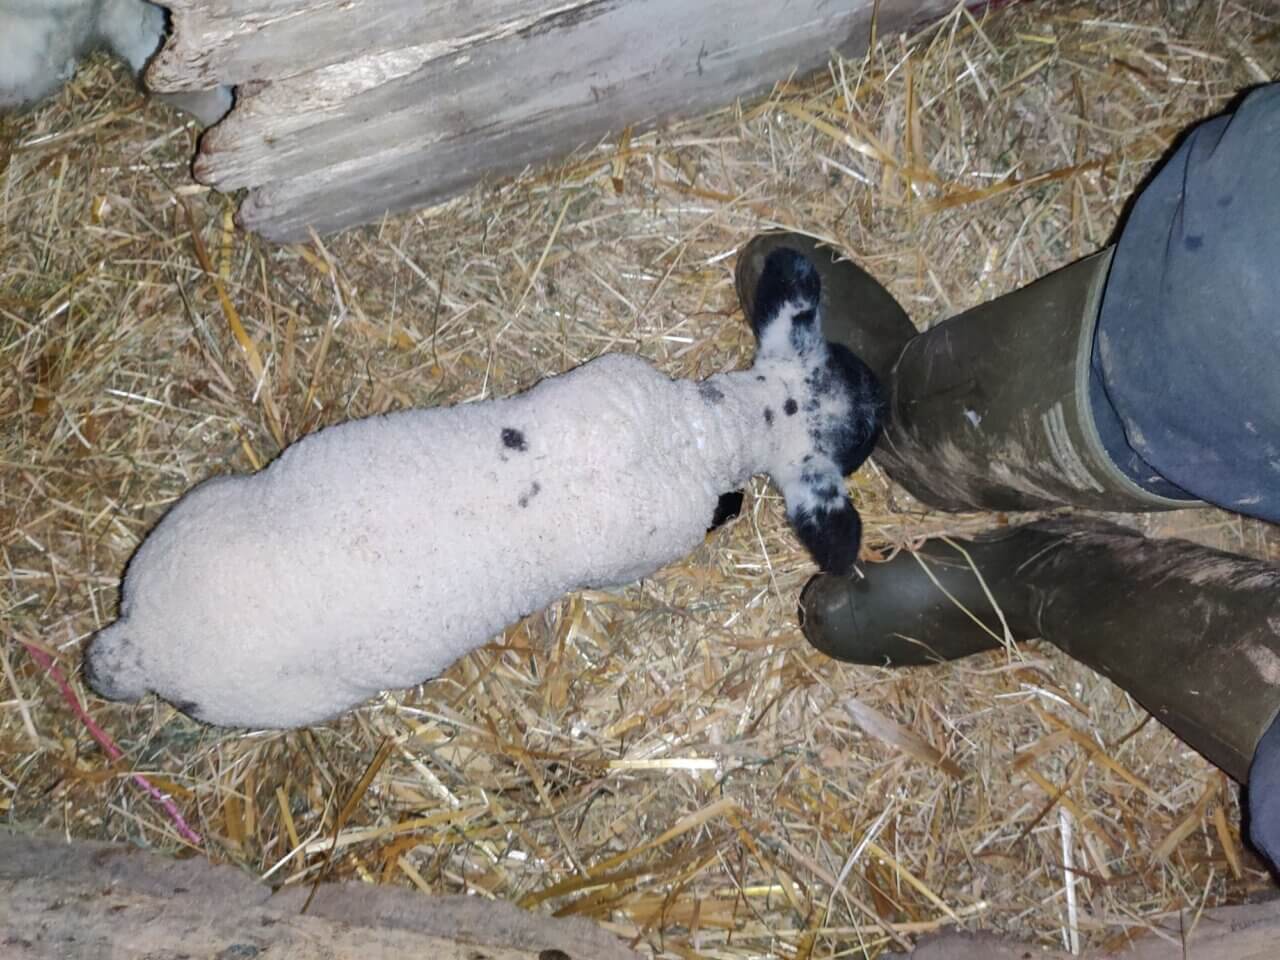 An orphan lamb after feeding